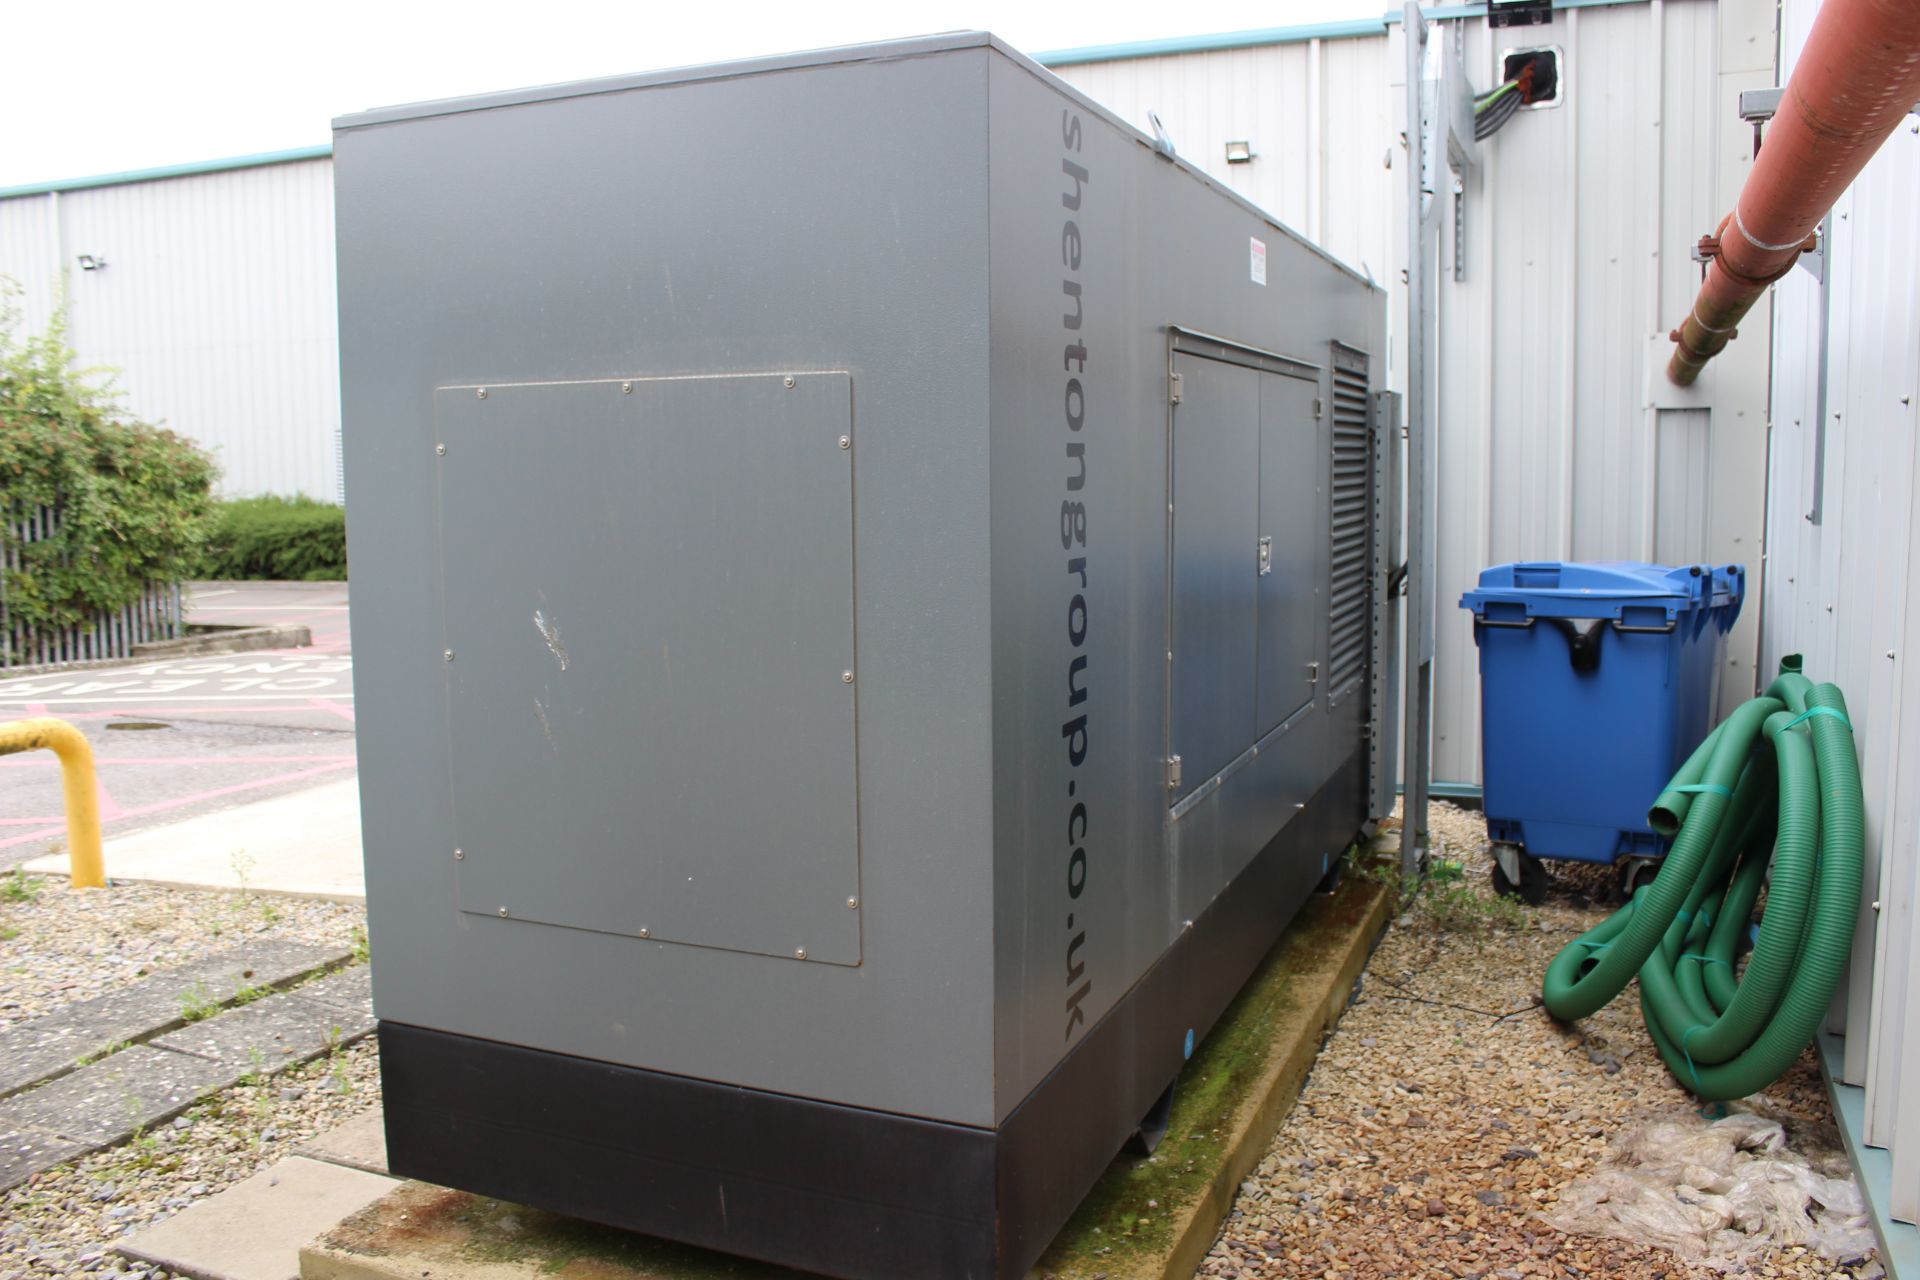 Shenton PHG 248DO 248 Kva diesel generator - Image 2 of 5